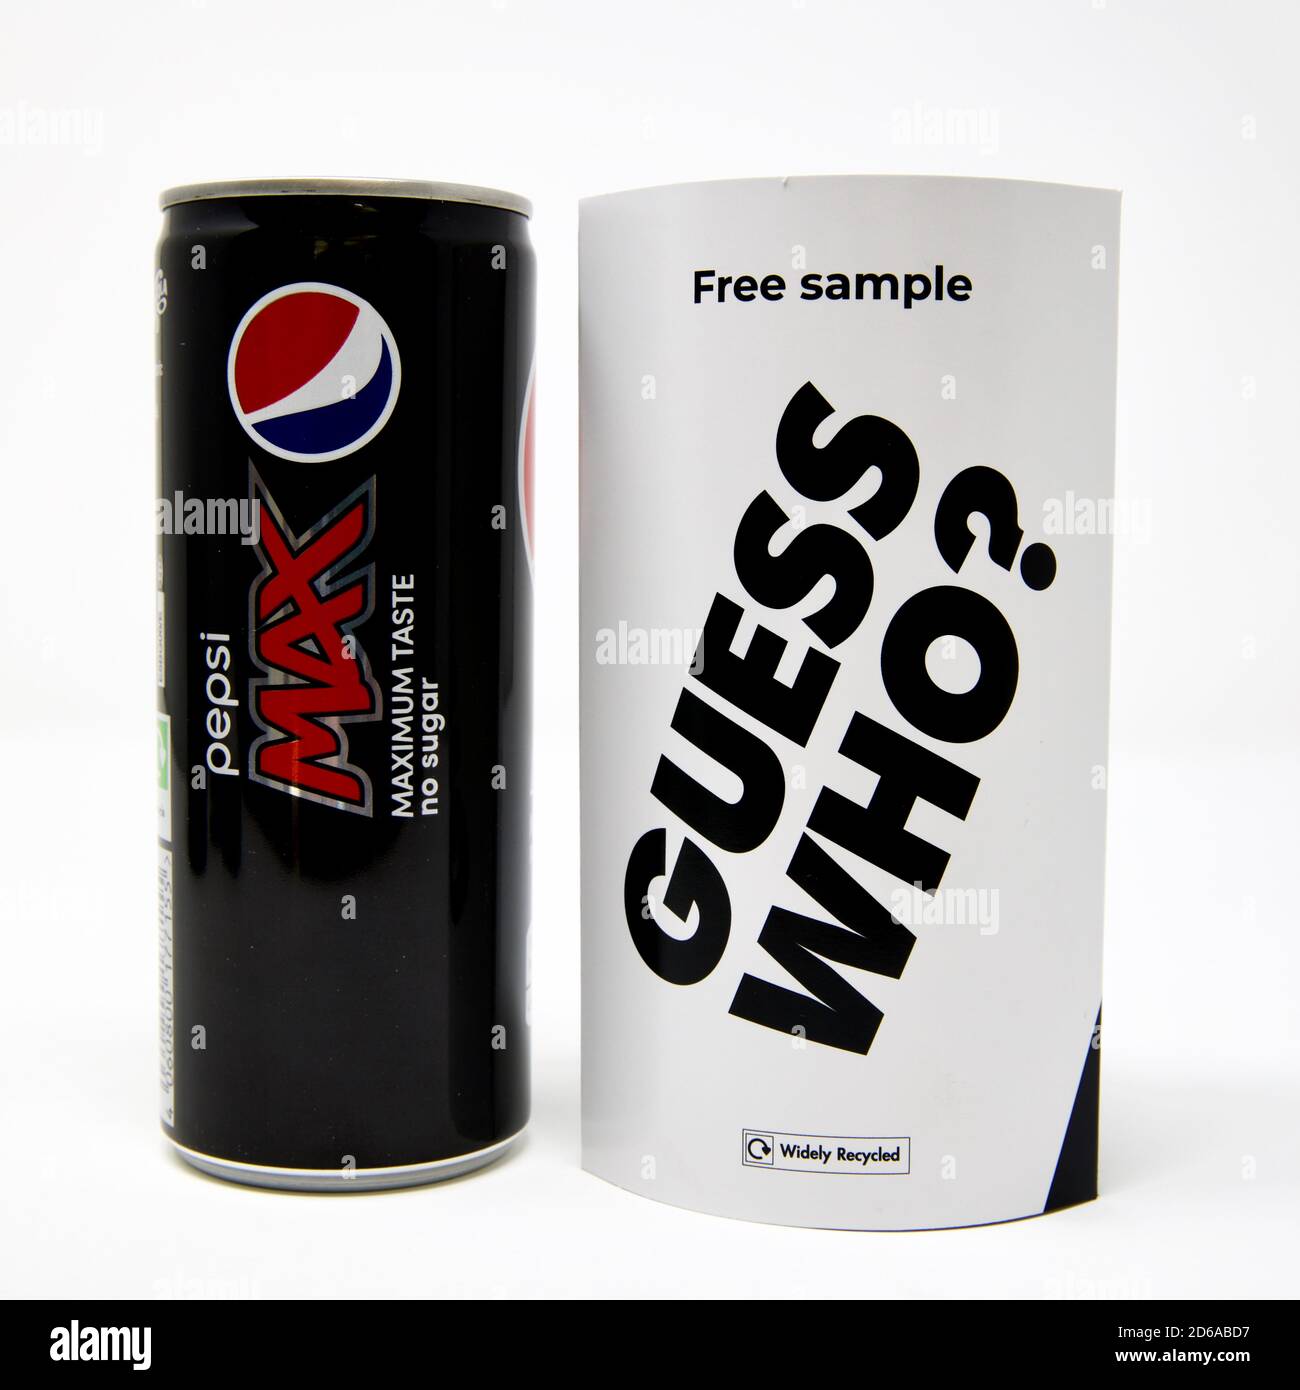 Pepsi Challenge - Guess Who Free sample Stock Photo - Alamy